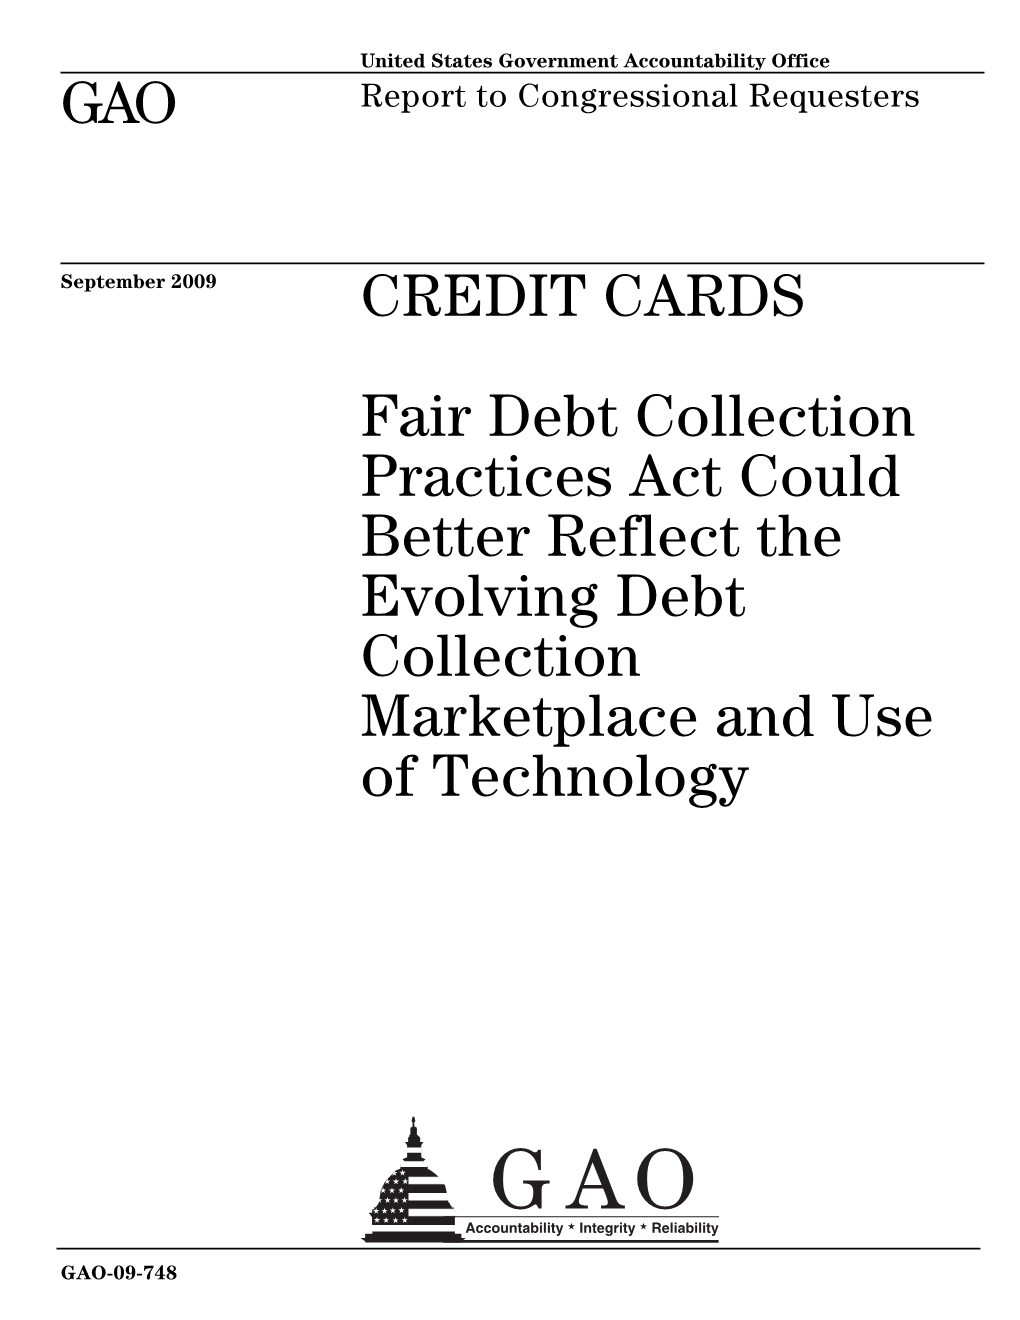 GAO-09-748 Credit Cards